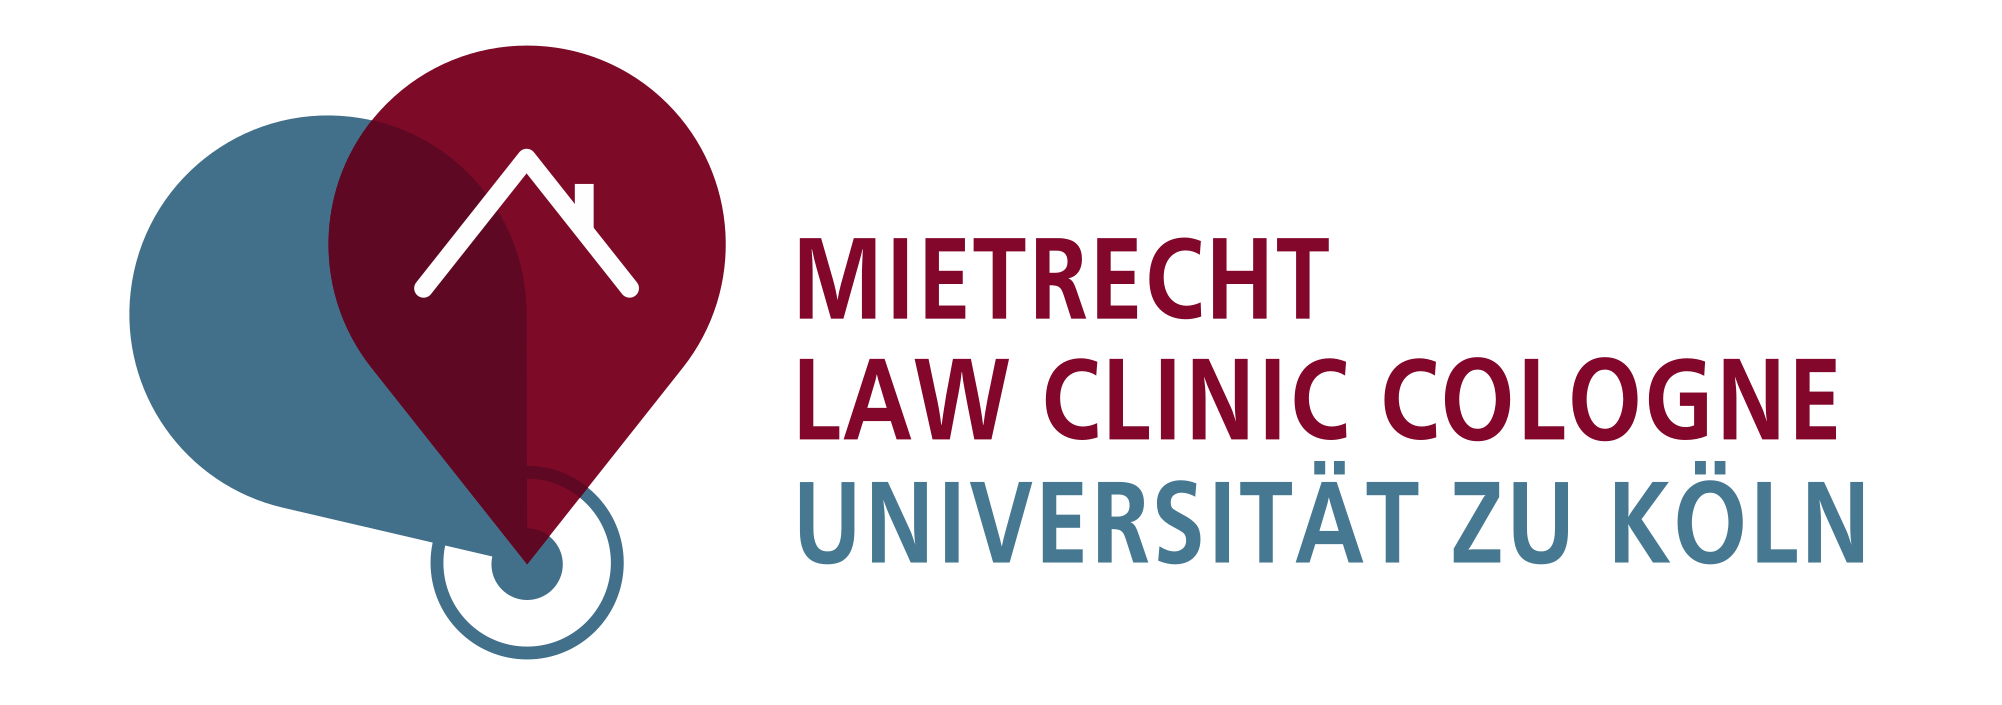 Mietrecht Law Clinic Cologne